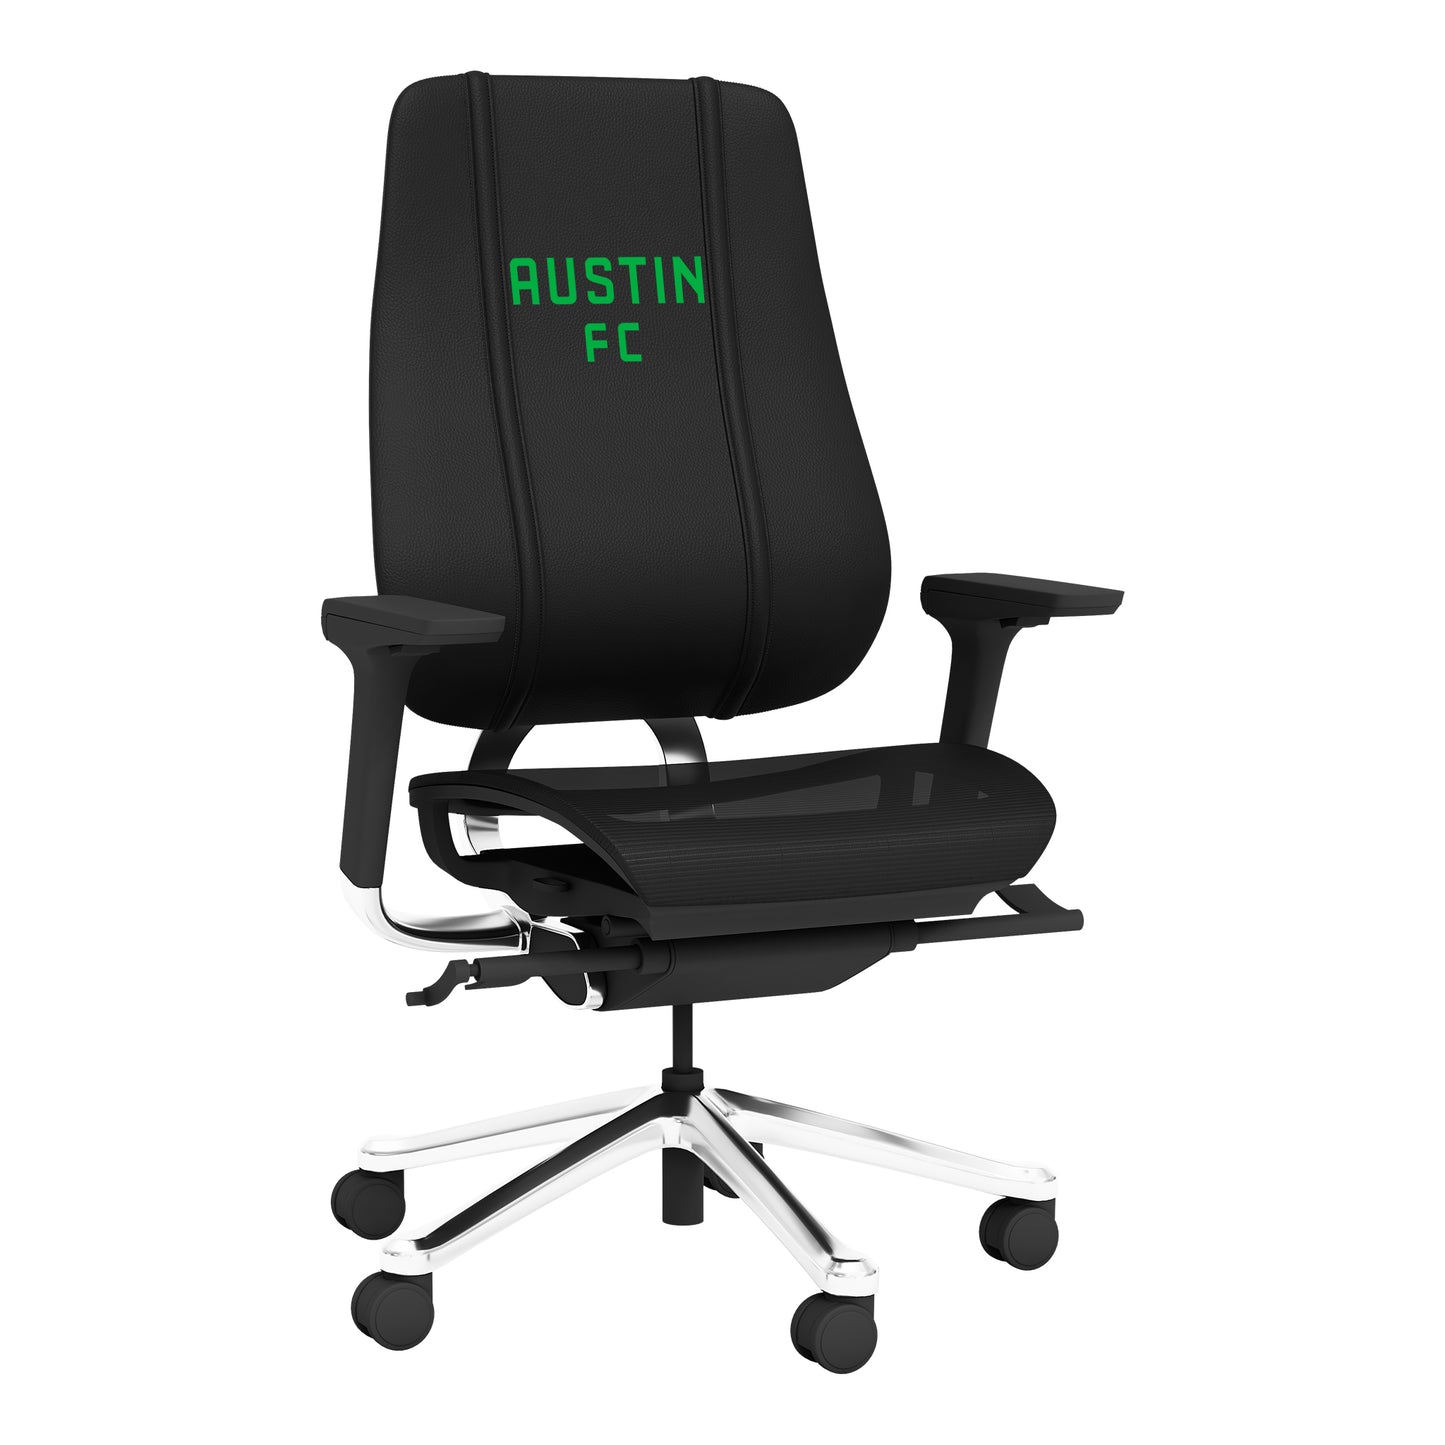 Phantomx Mesh Gaming Chair with Austin FC Wordmark Logo